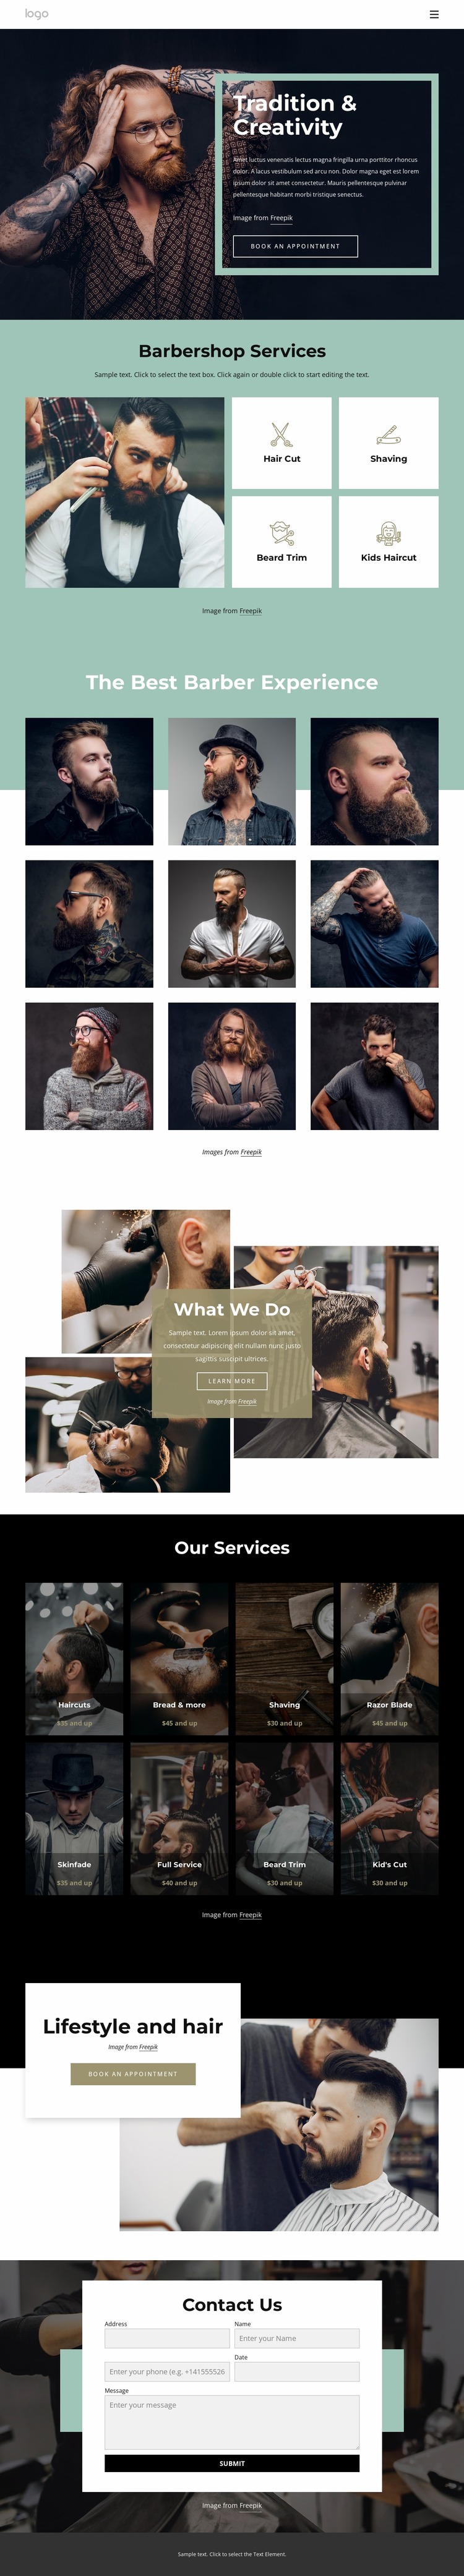 Public barber salon Html Website Builder